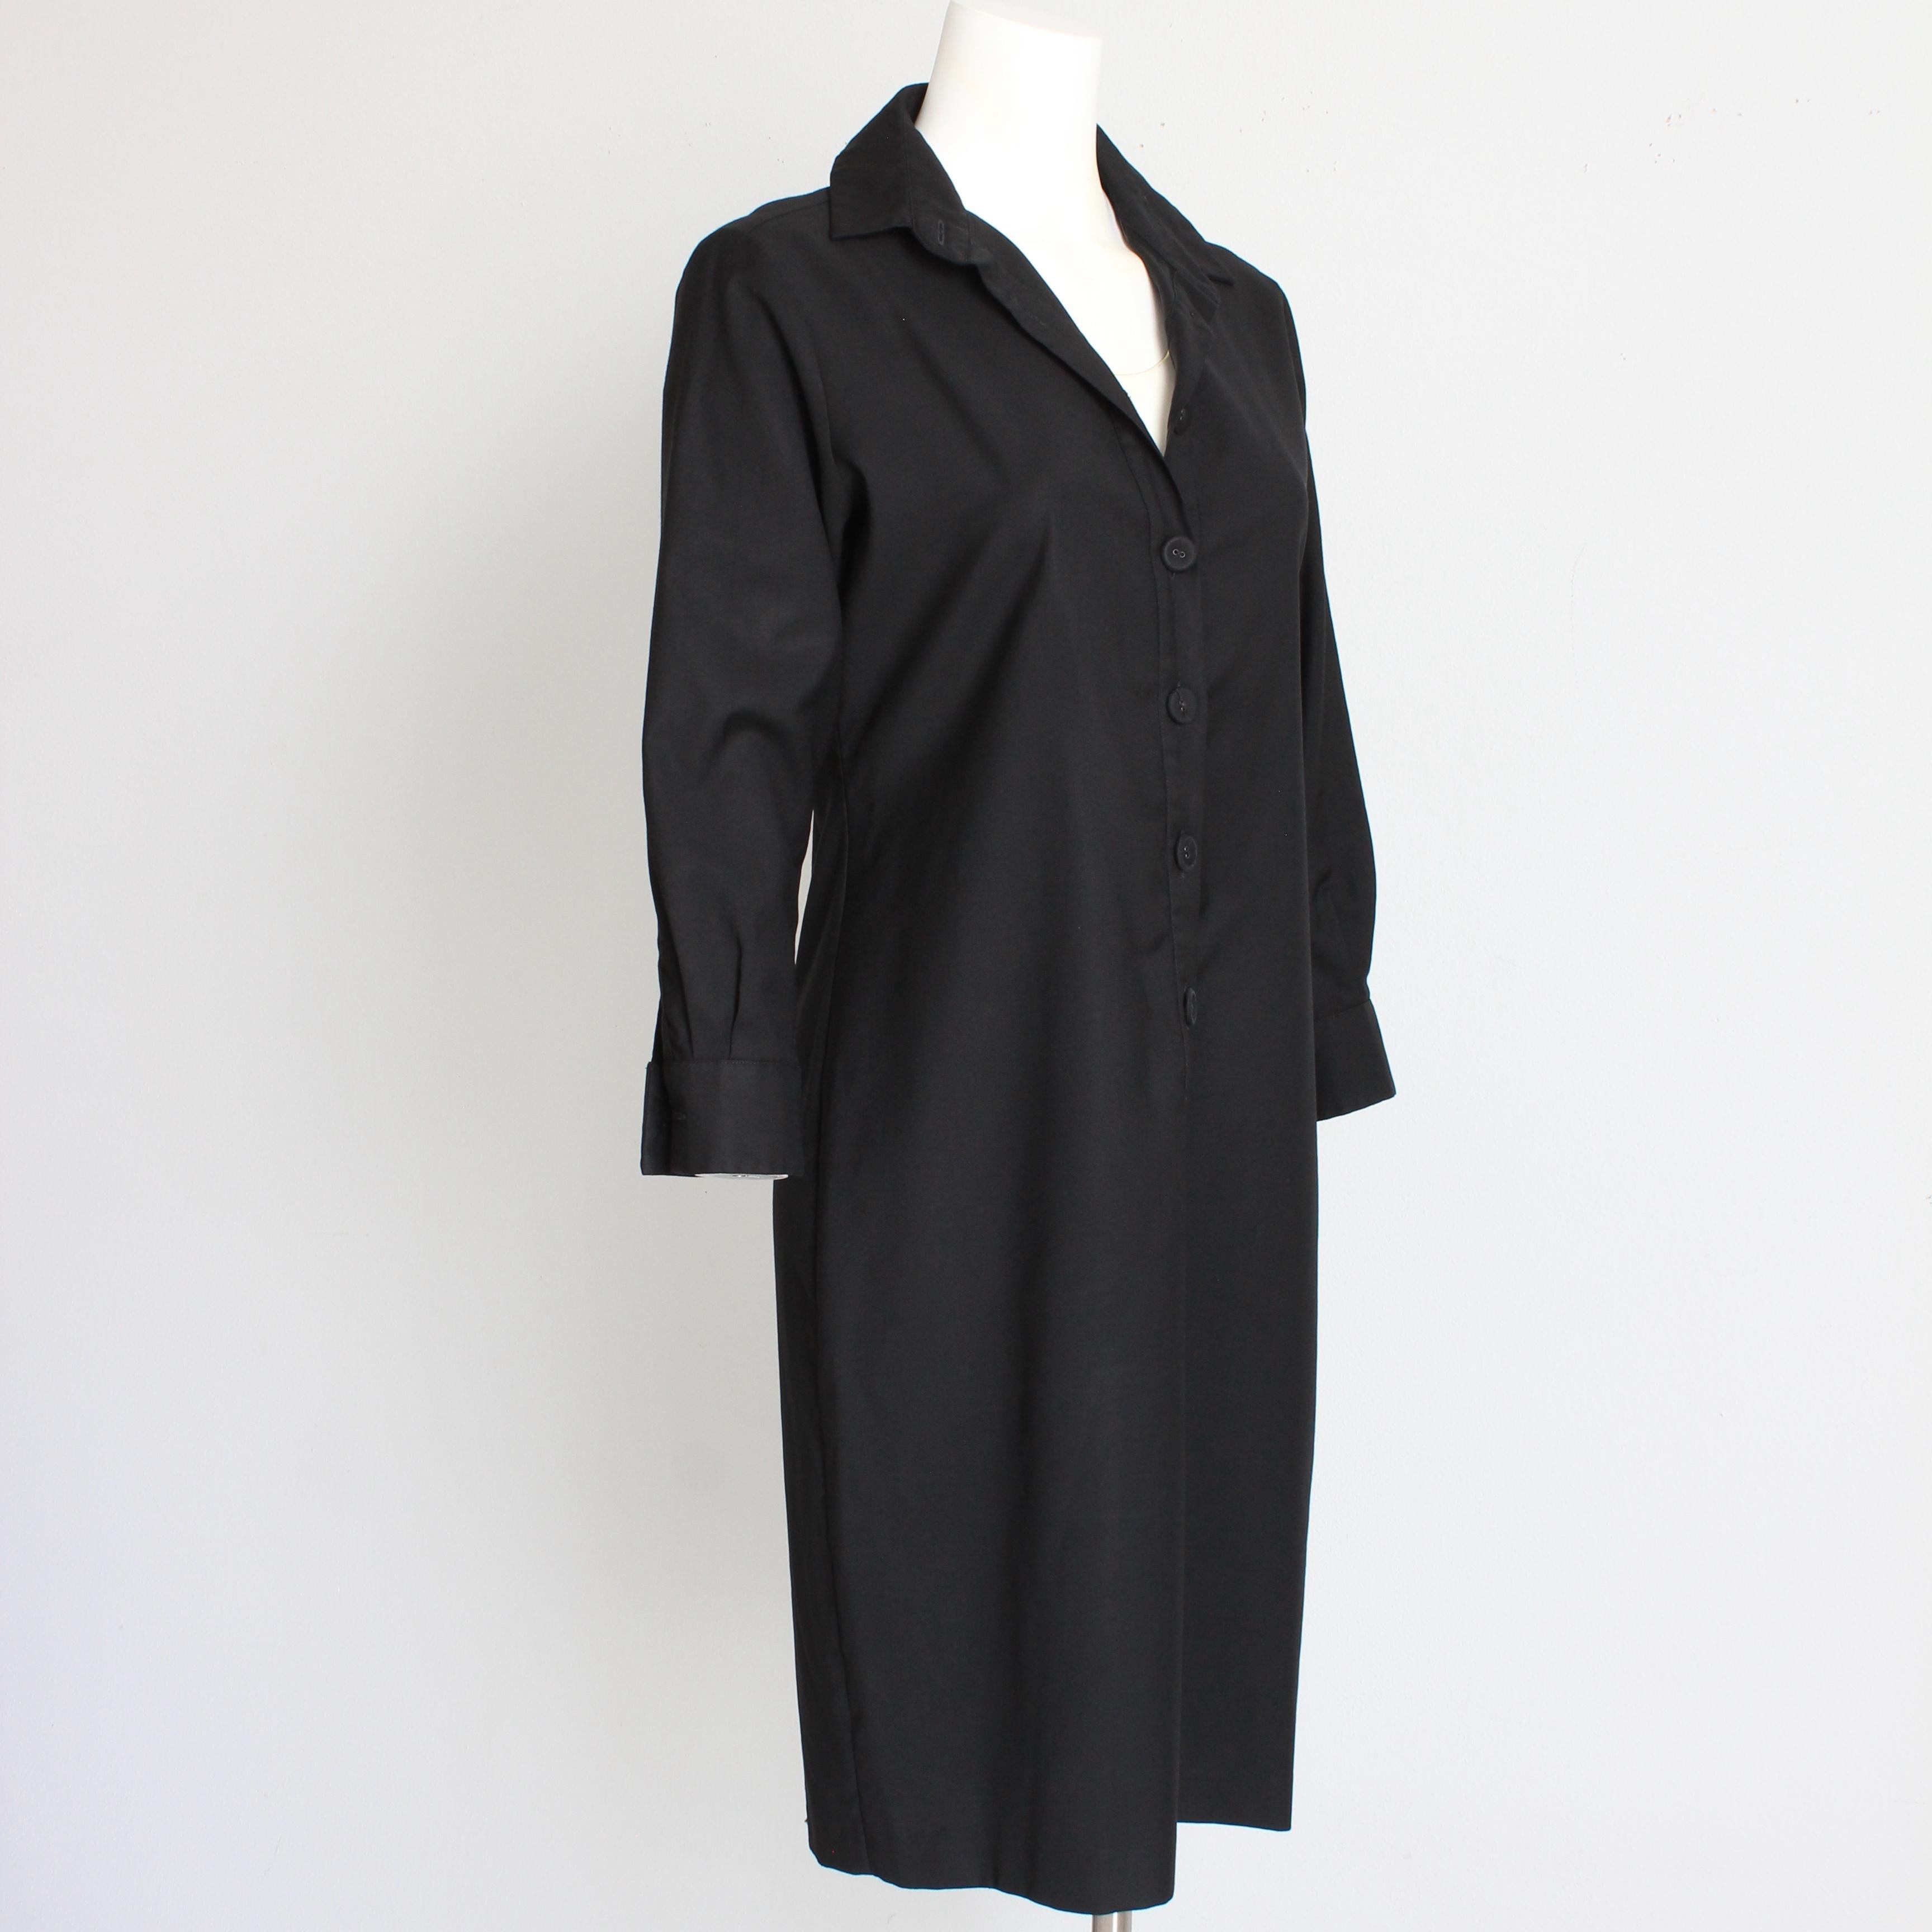 Women's or Men's Bottega Veneta Dress Black Wool Twill Shirtwaist LBD Button Front Sz 42 Italy For Sale